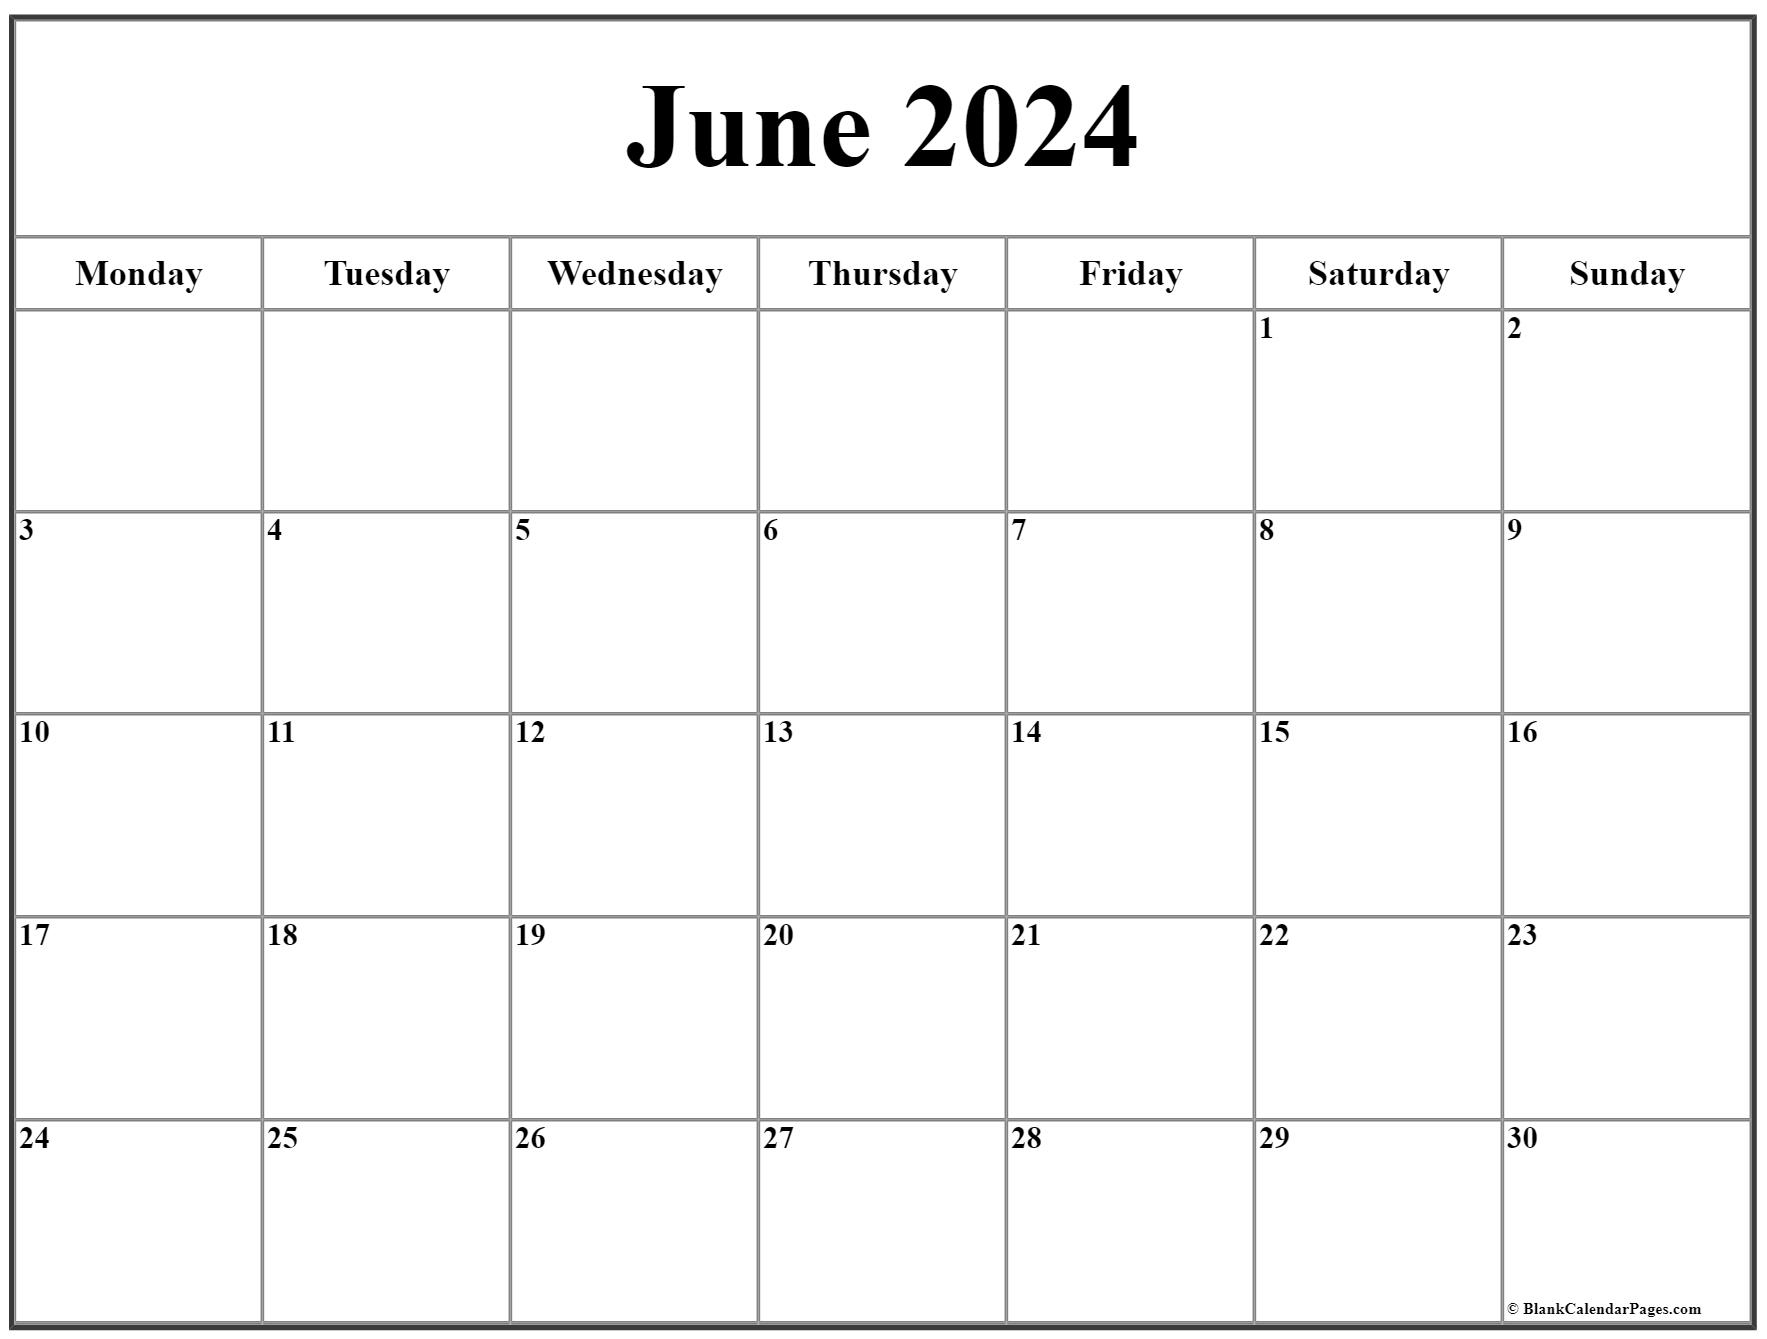 June 2024 Monday Calendar | Monday To Sunday for June 2024 Editable And Printable Calendar